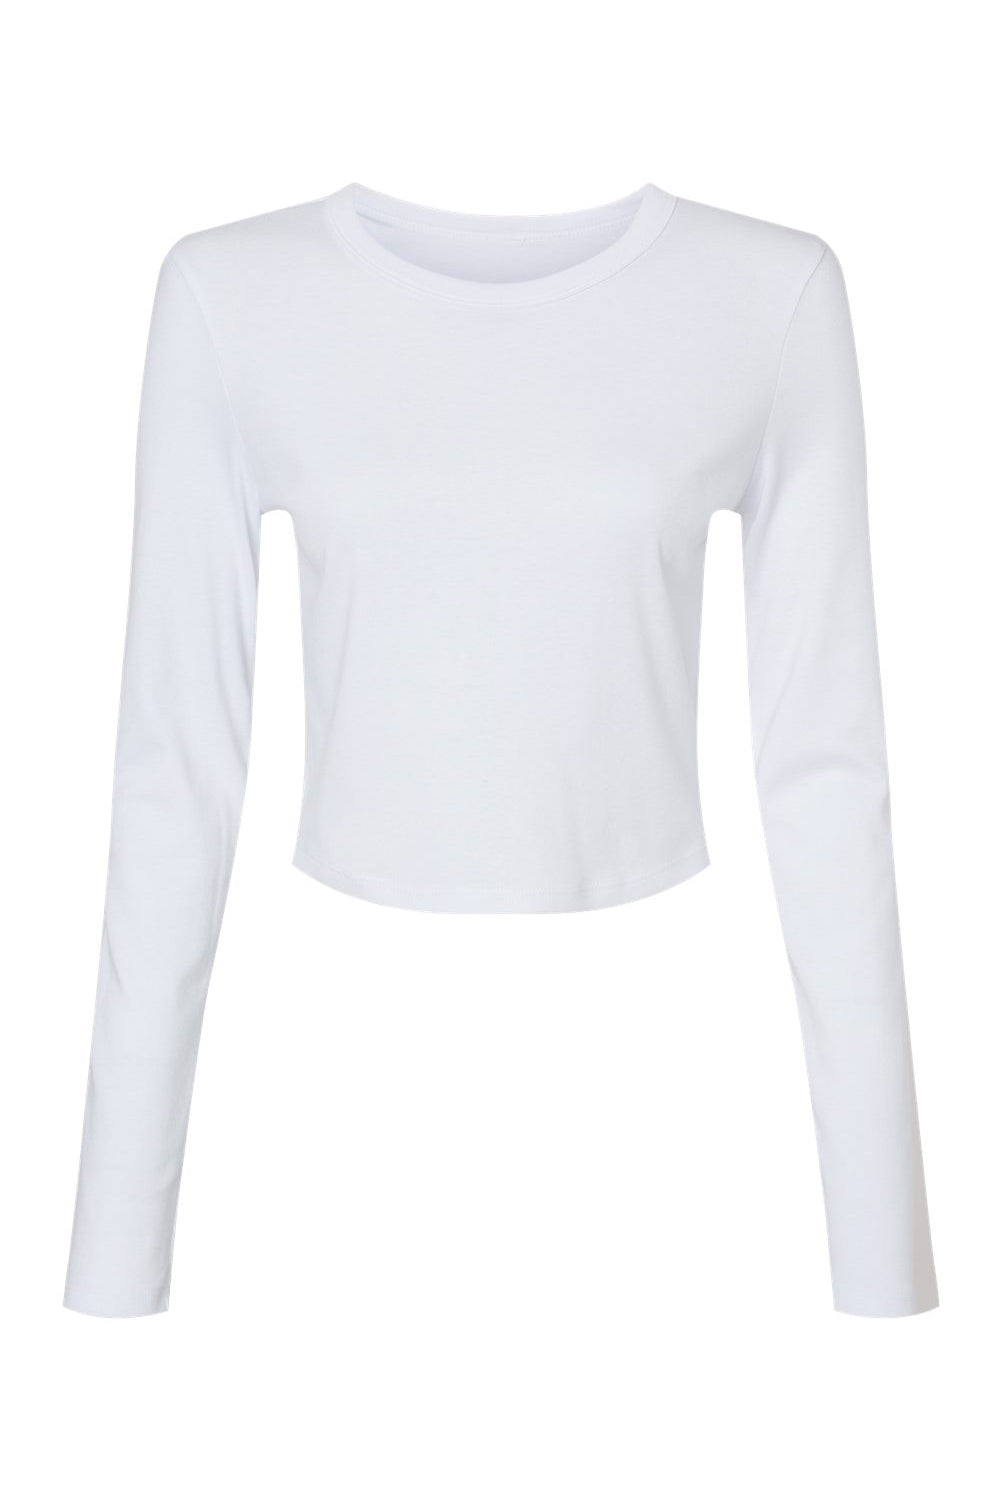 Bella + Canvas 1501 Womens Micro Rib Long Sleeve Crewneck T-Shirt Solid White Blend Flat Front